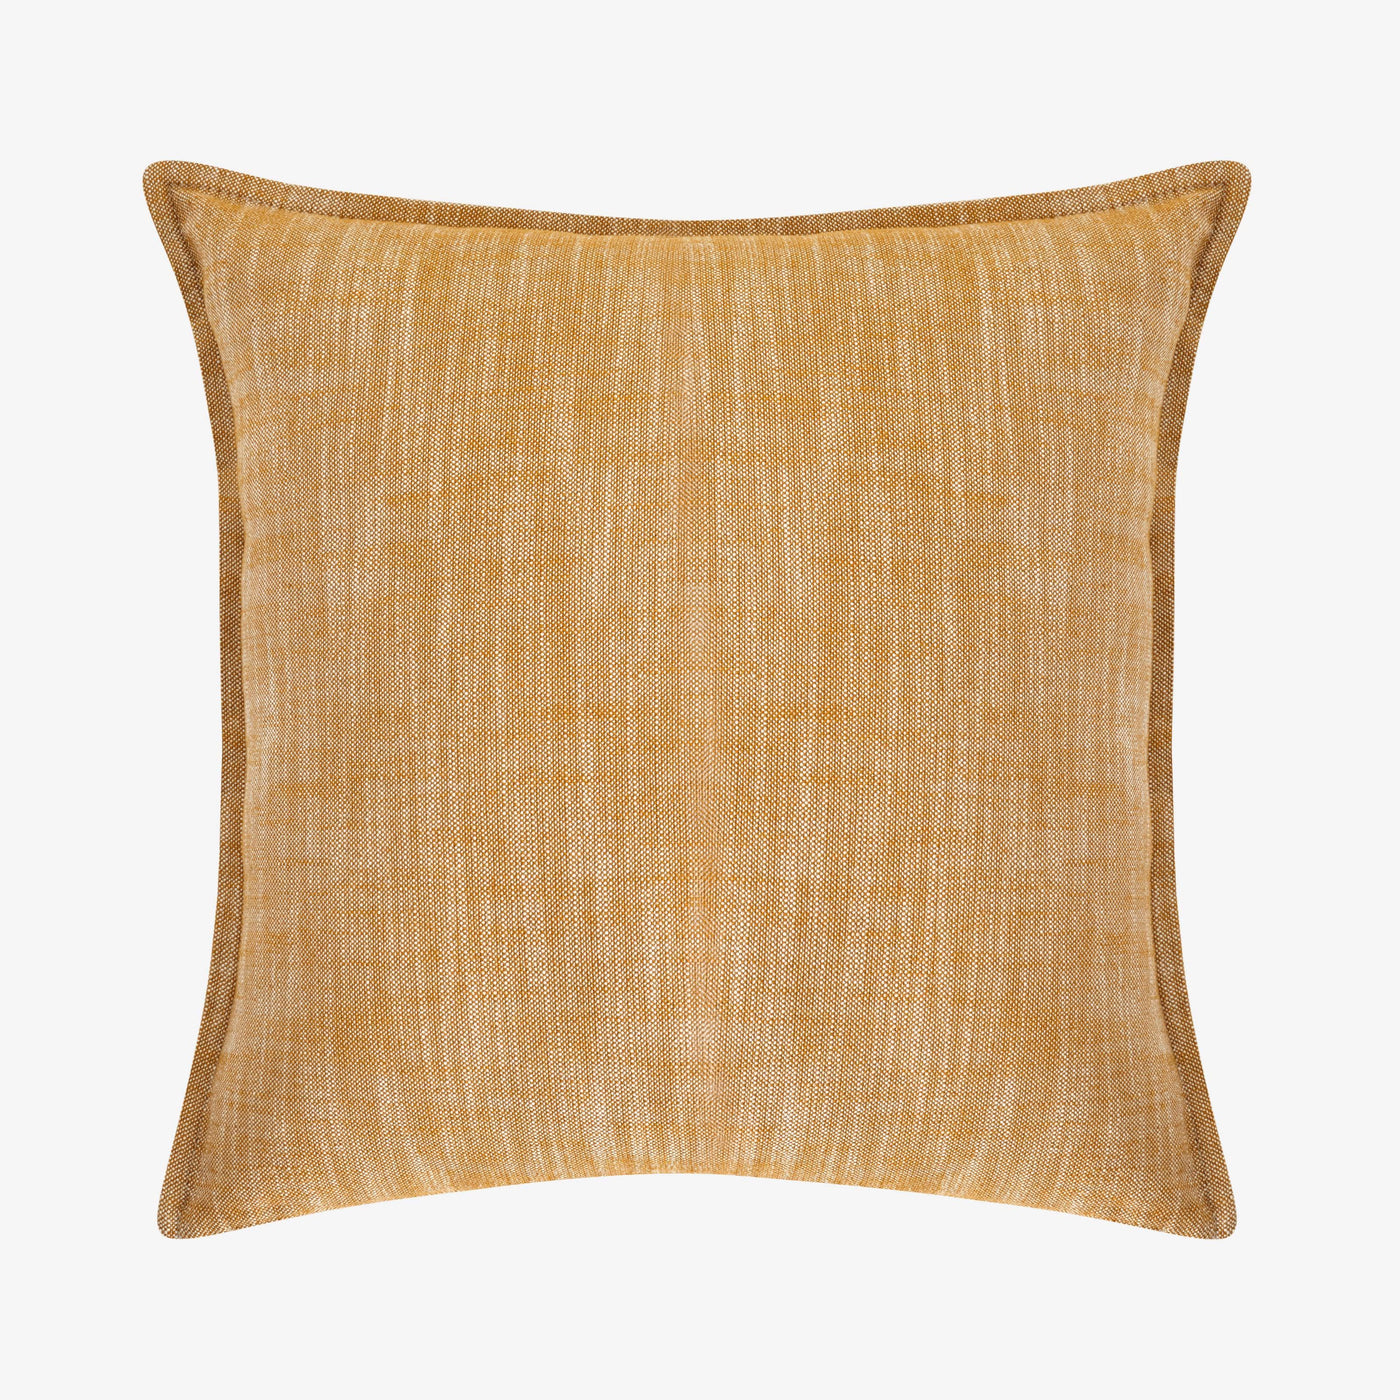 Optical Textured Cushion Cover, Mustard, 50x50 cm Cushion Covers sazy.com